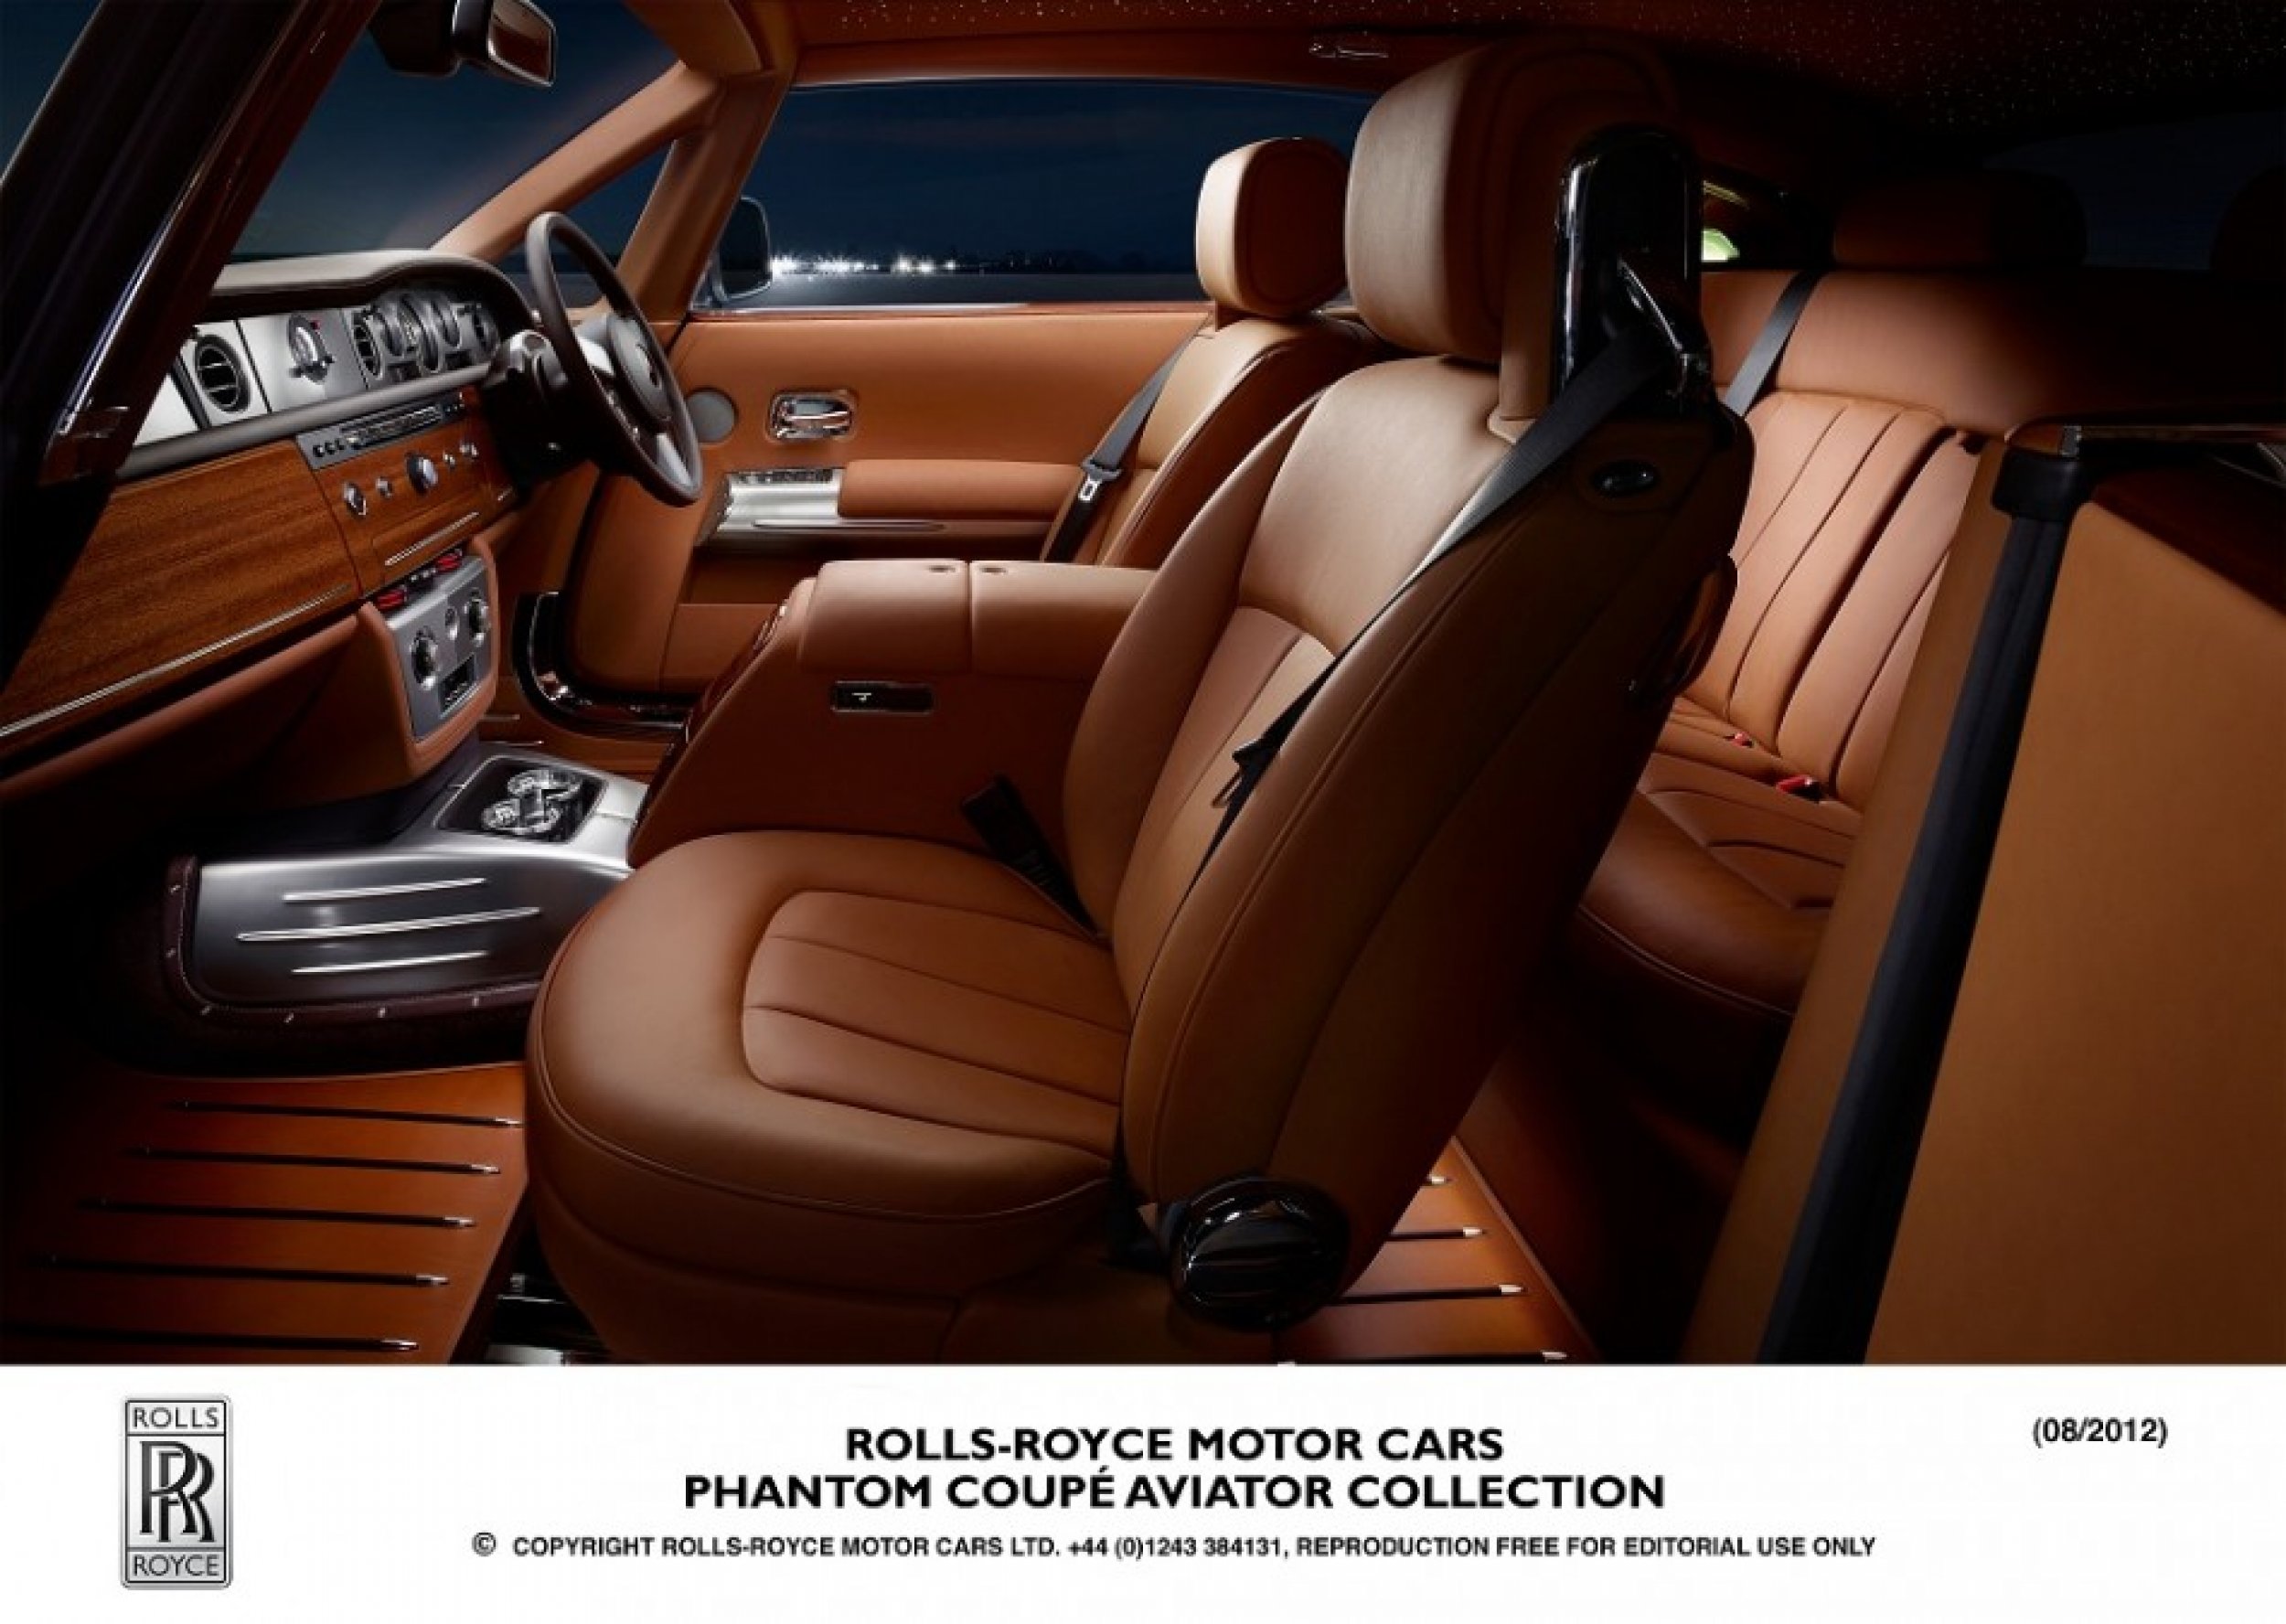 The interior of the new Rolls-Royce Phantom Coupe Aviator.